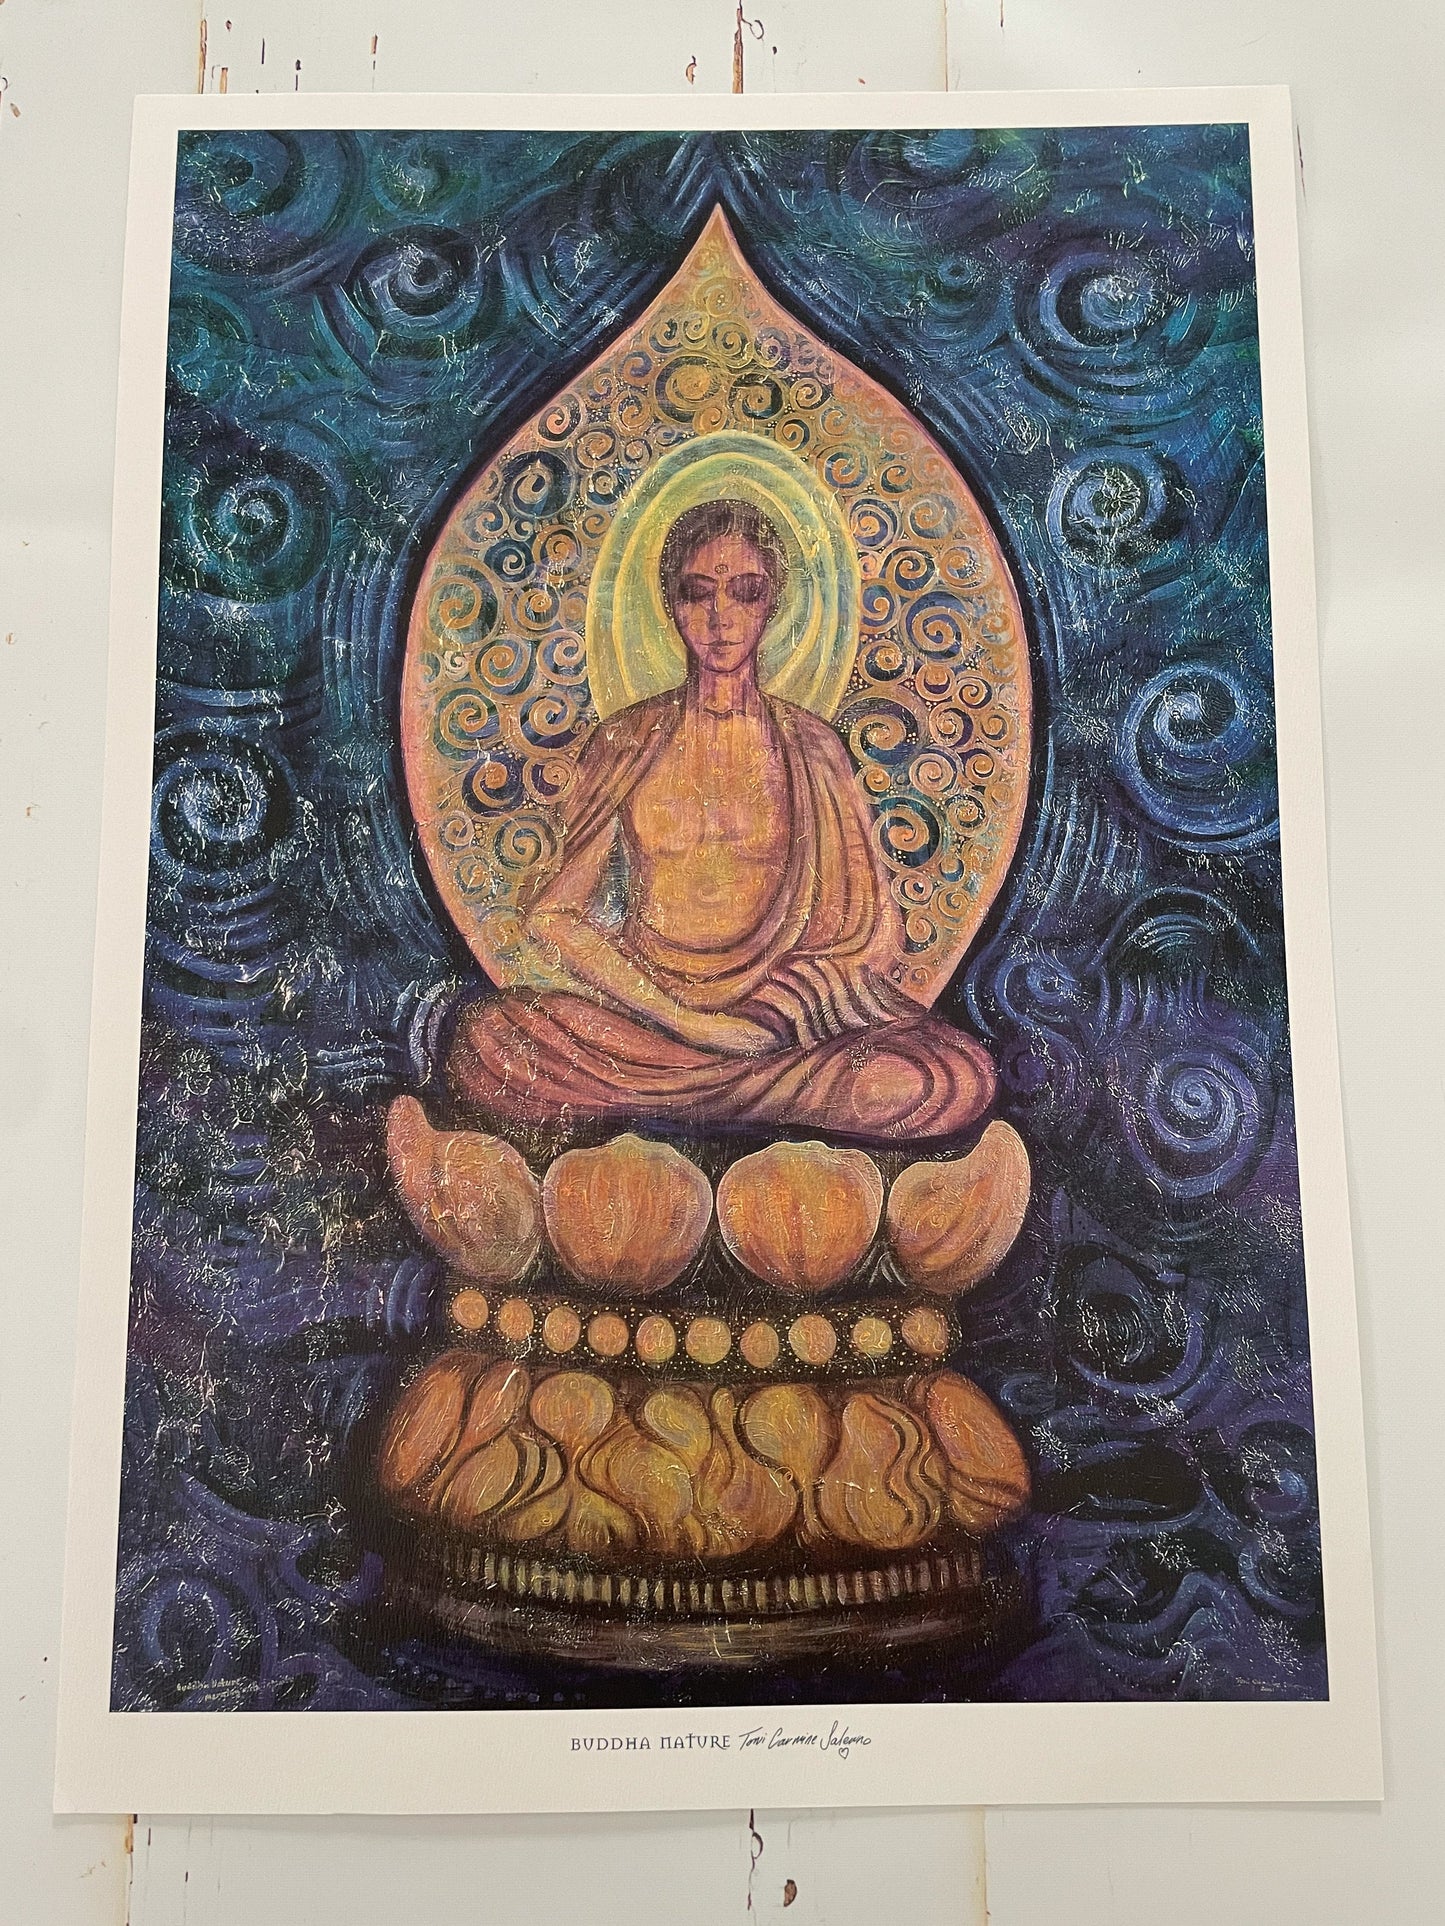 Buddha Nature Print by Toni Carmine Salerno-Happily Zen